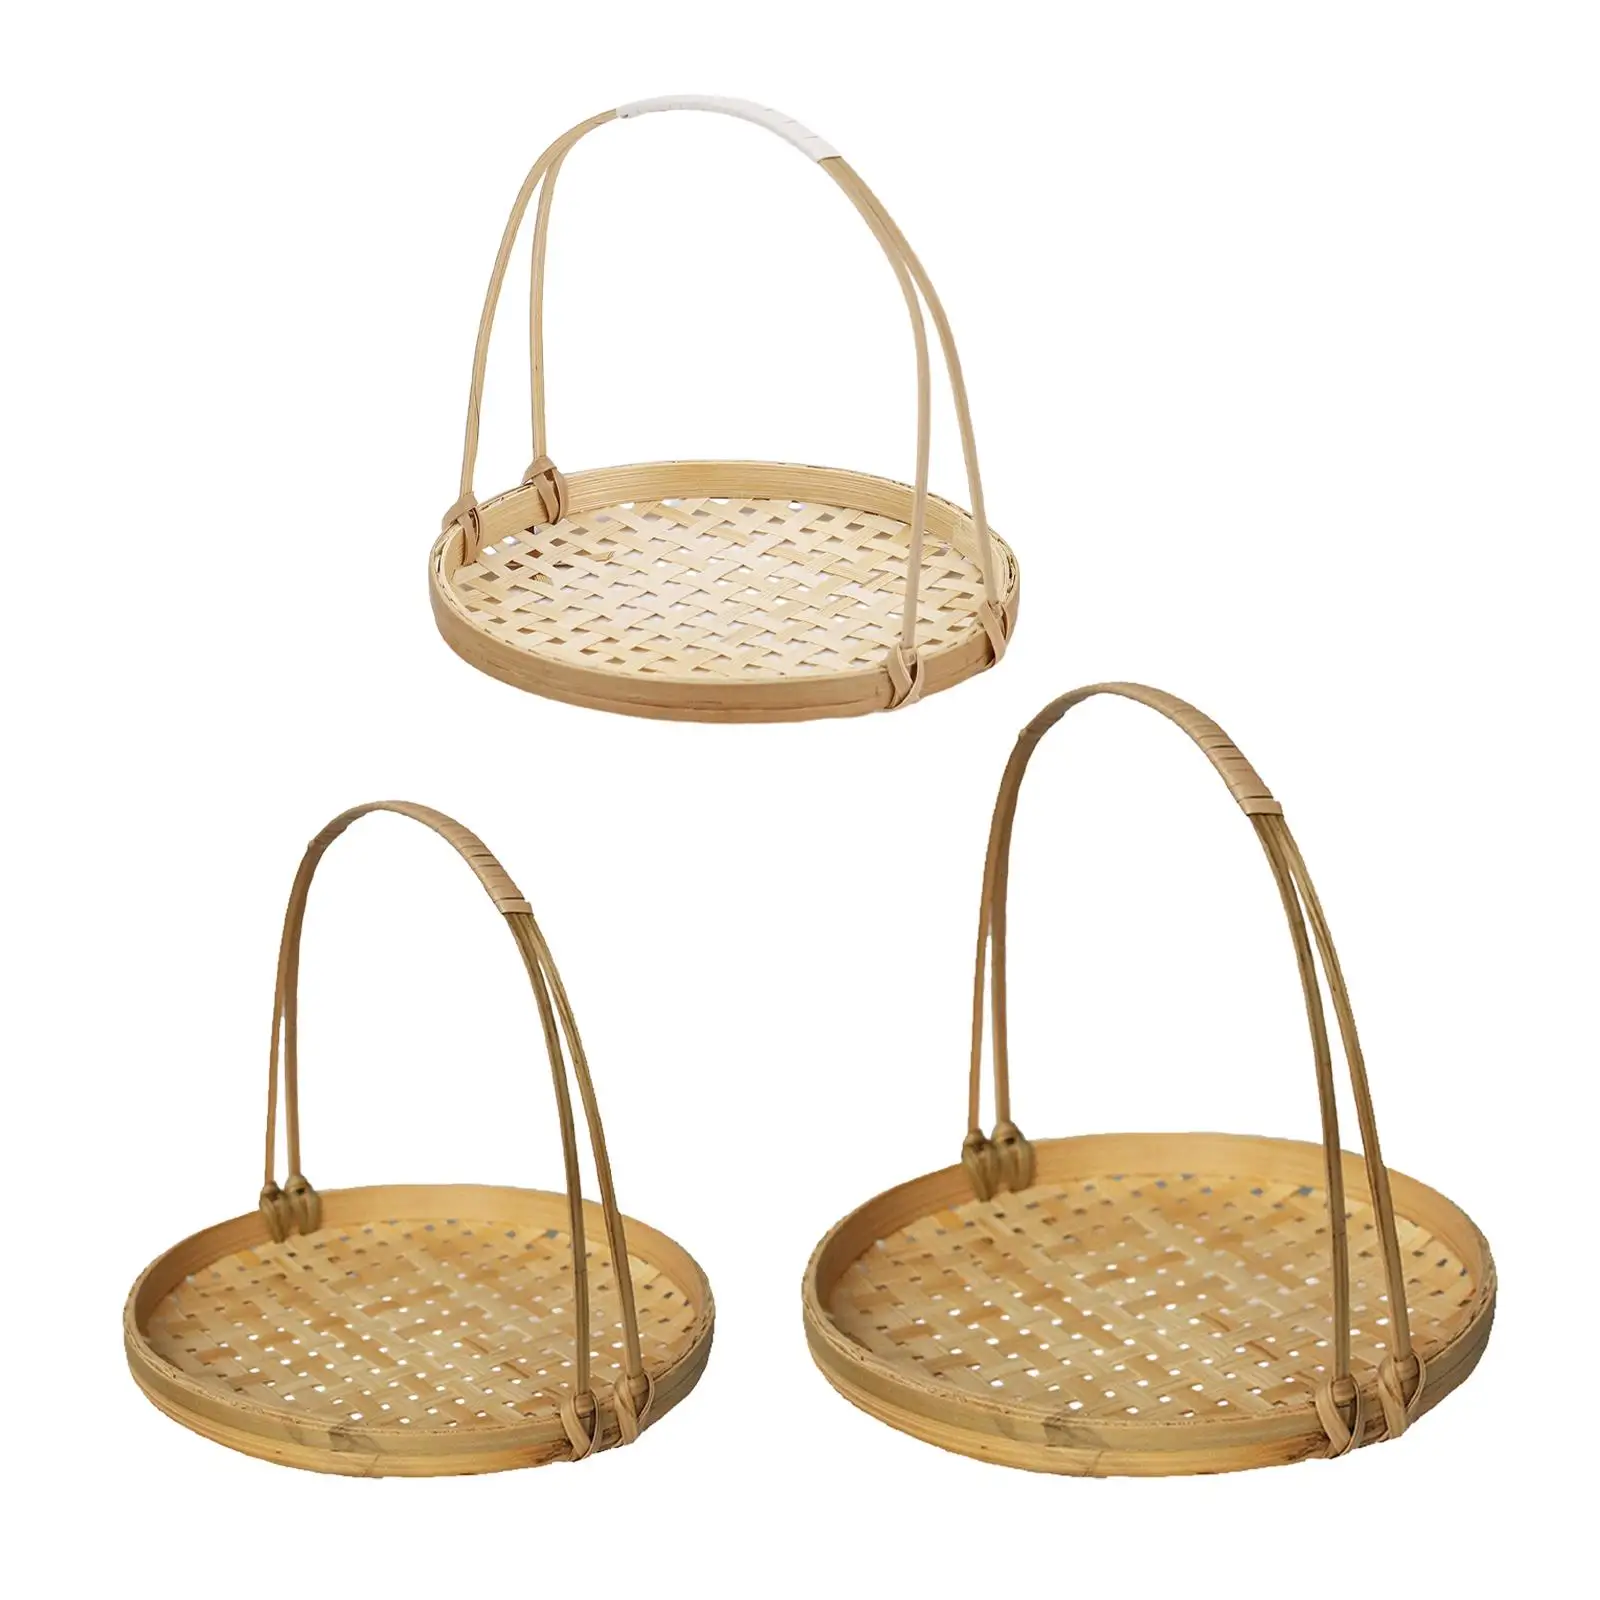 Hand Woven Fruit Basket Organizer Rattan Decorative Farmhosue Multipurpose with